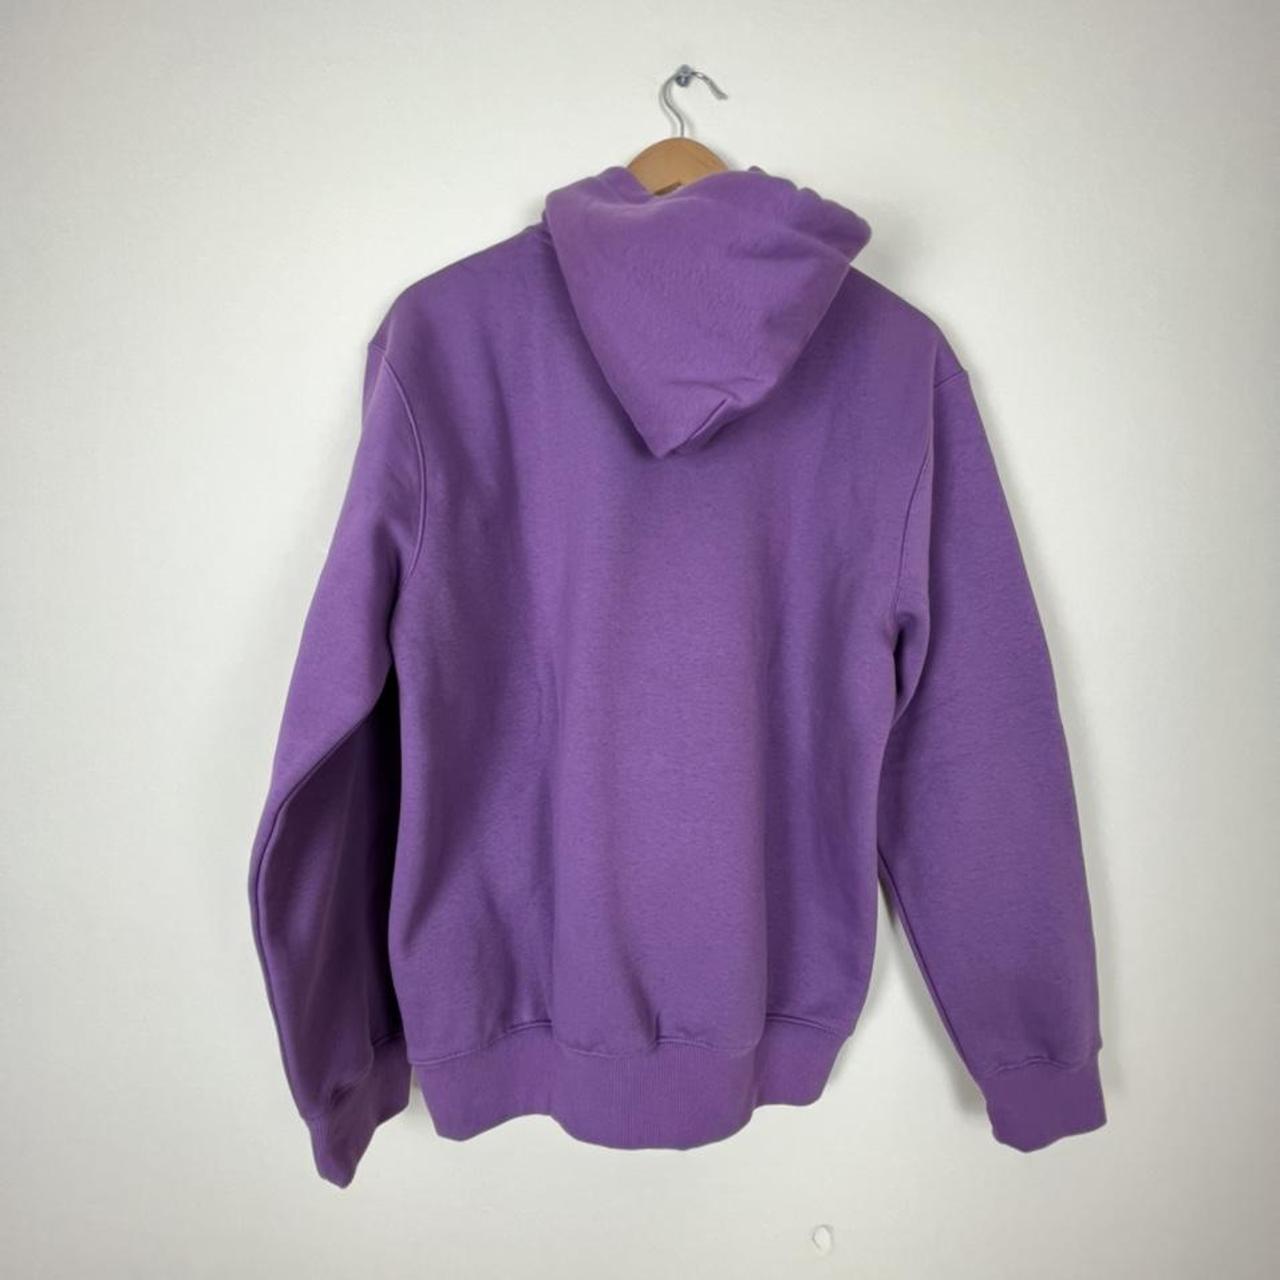 Carhartt embroidered graphic purple Hoody jumper... - Depop